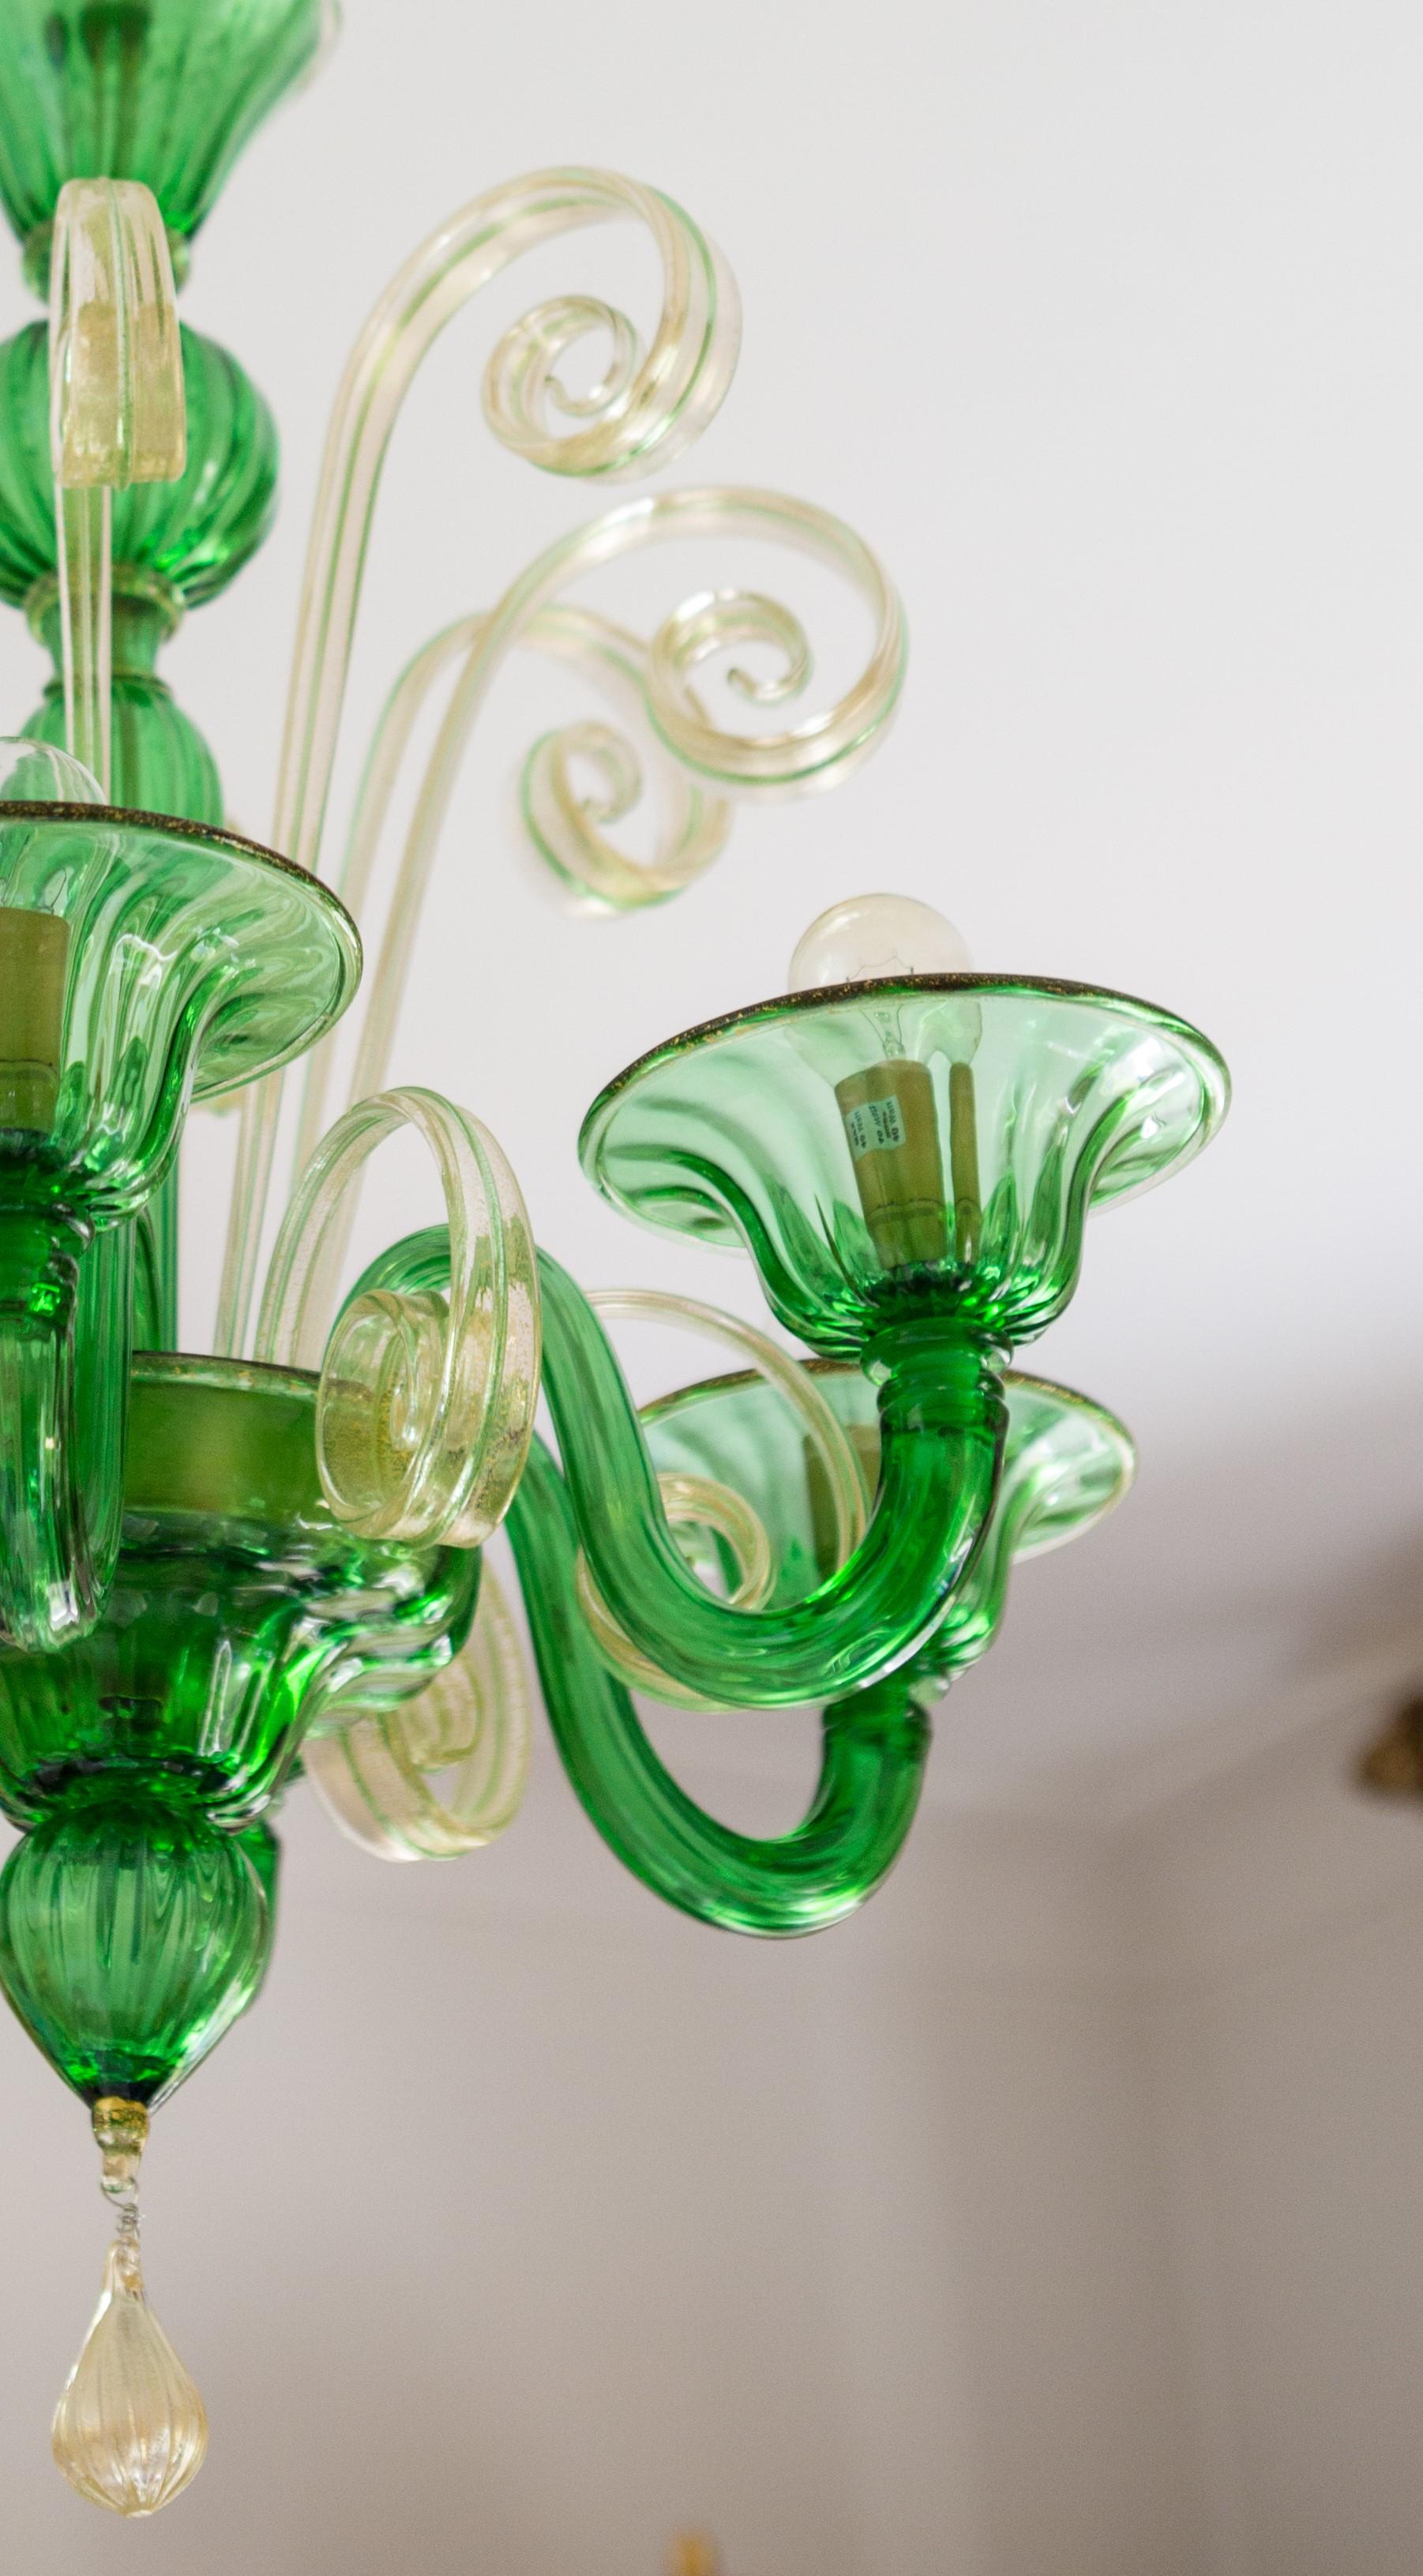 murano glass chandelier uk